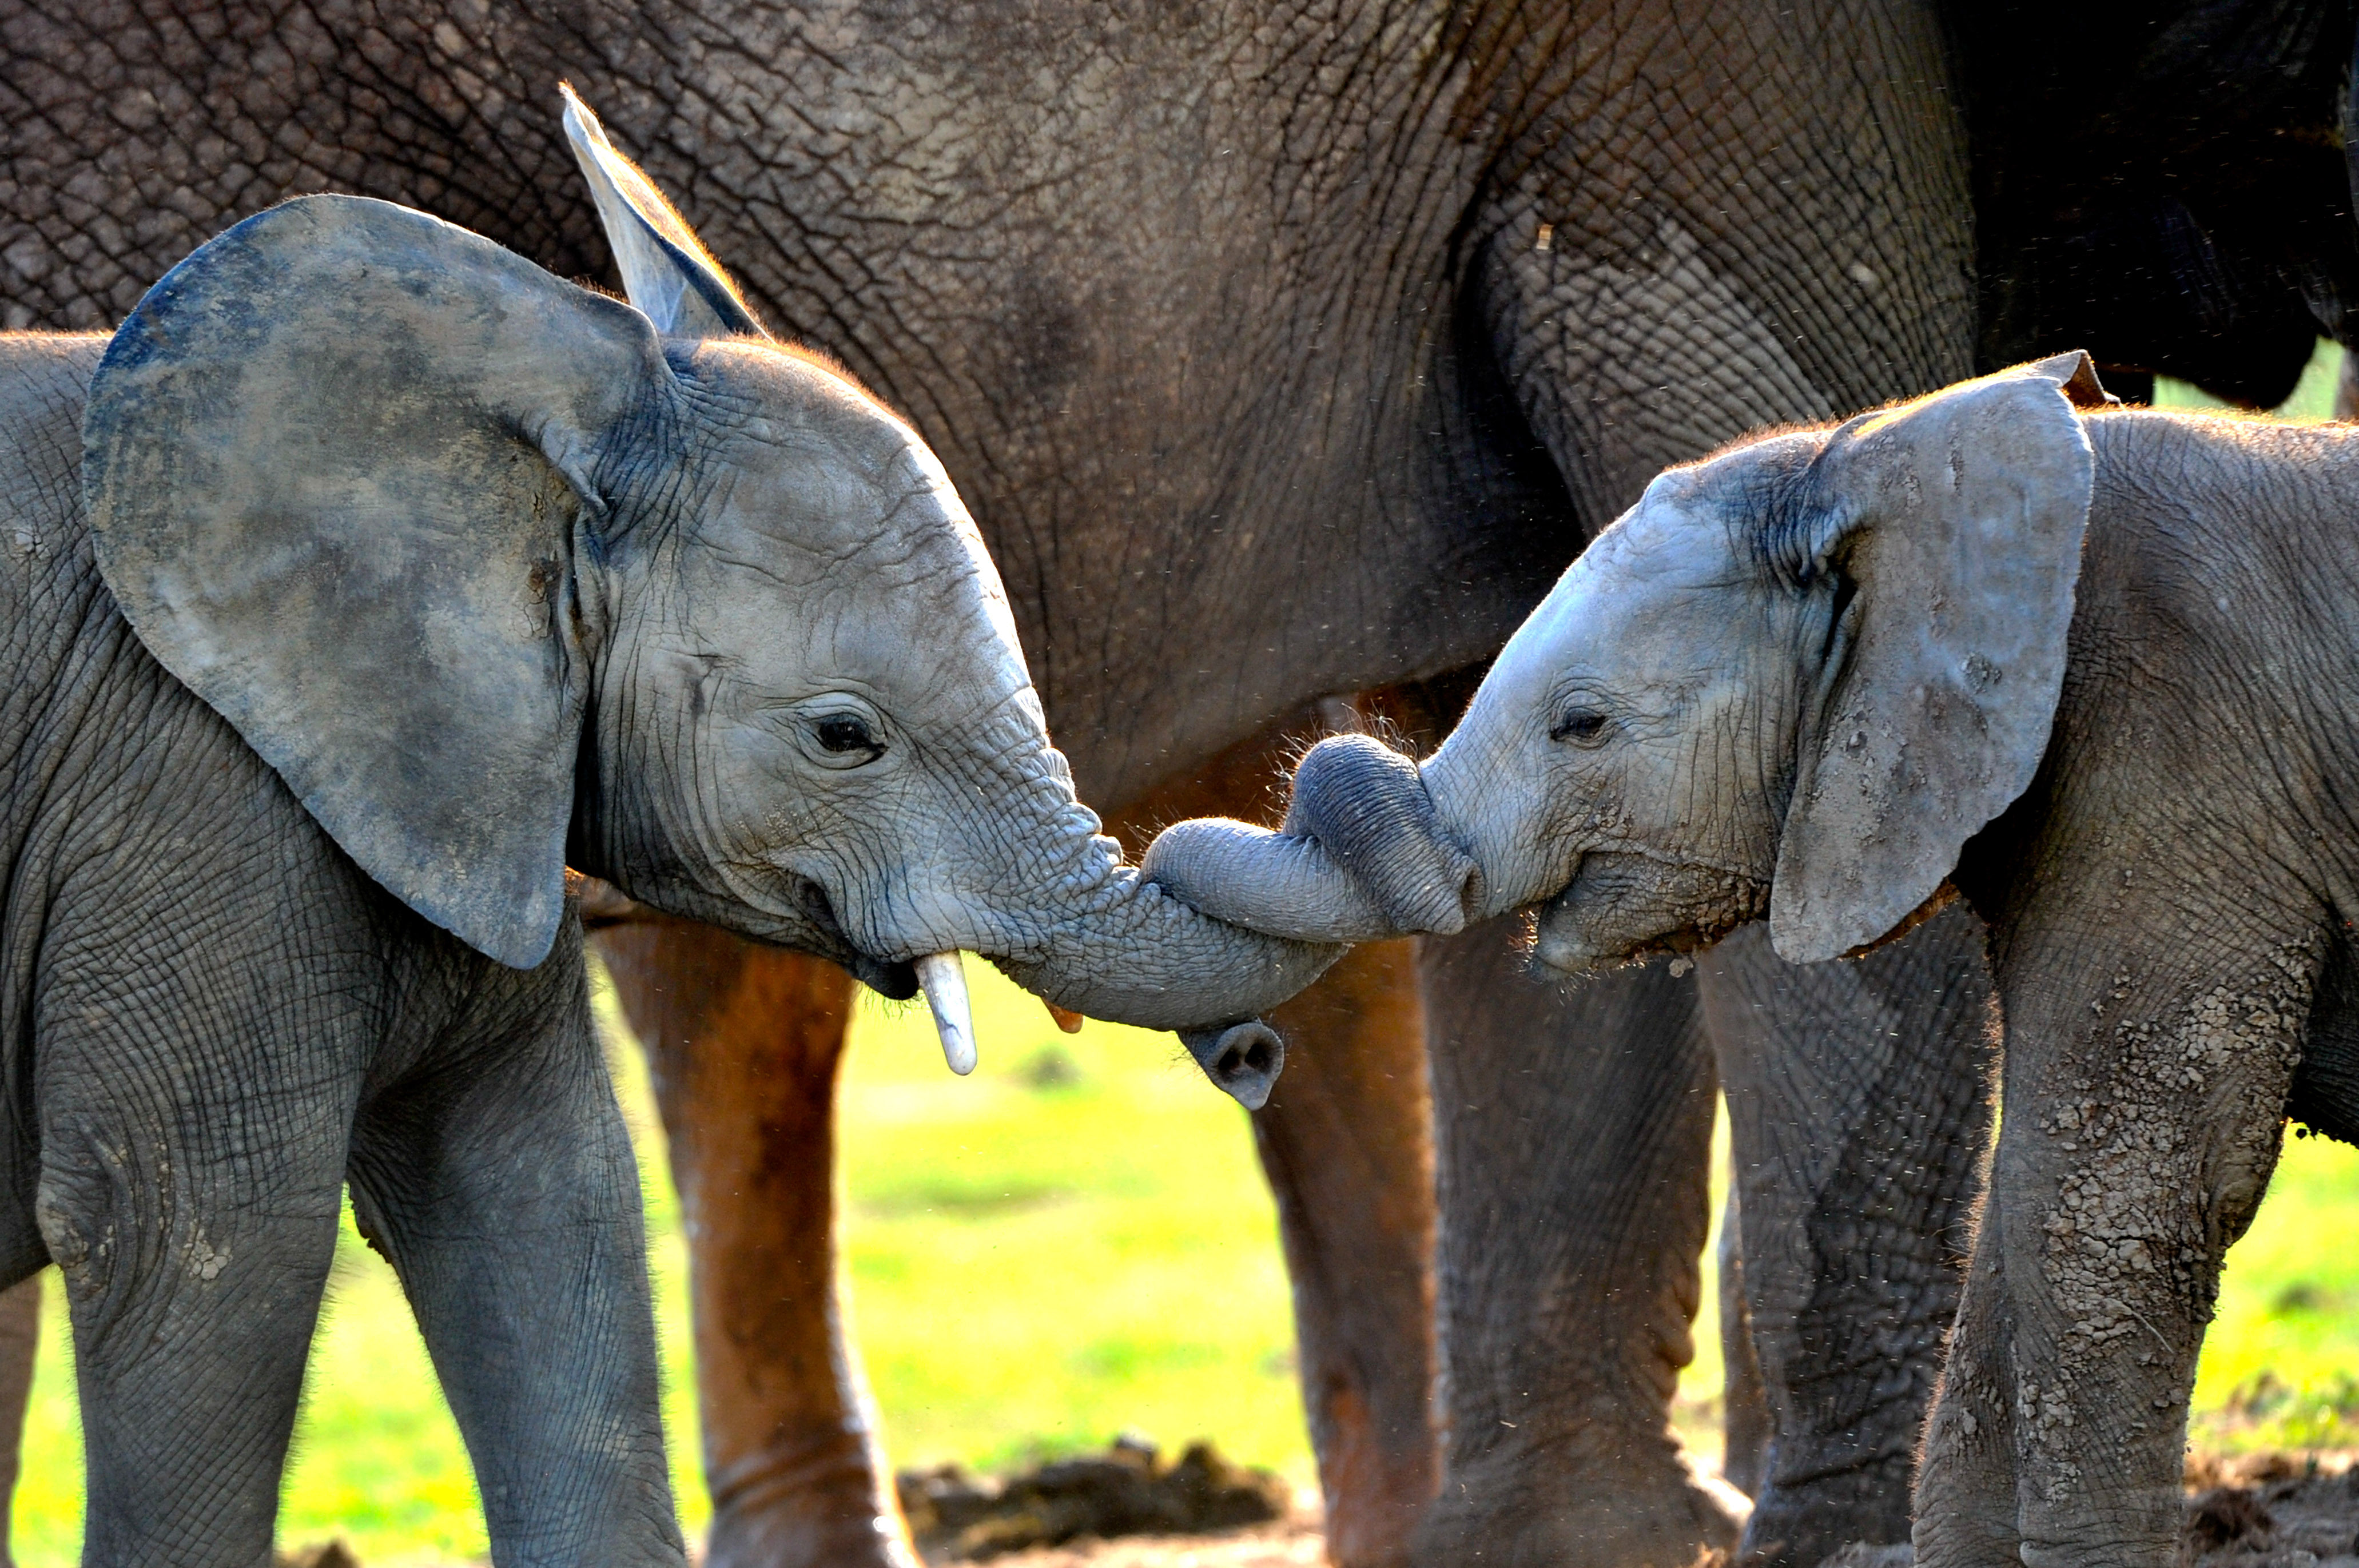 How do baby elephants play?